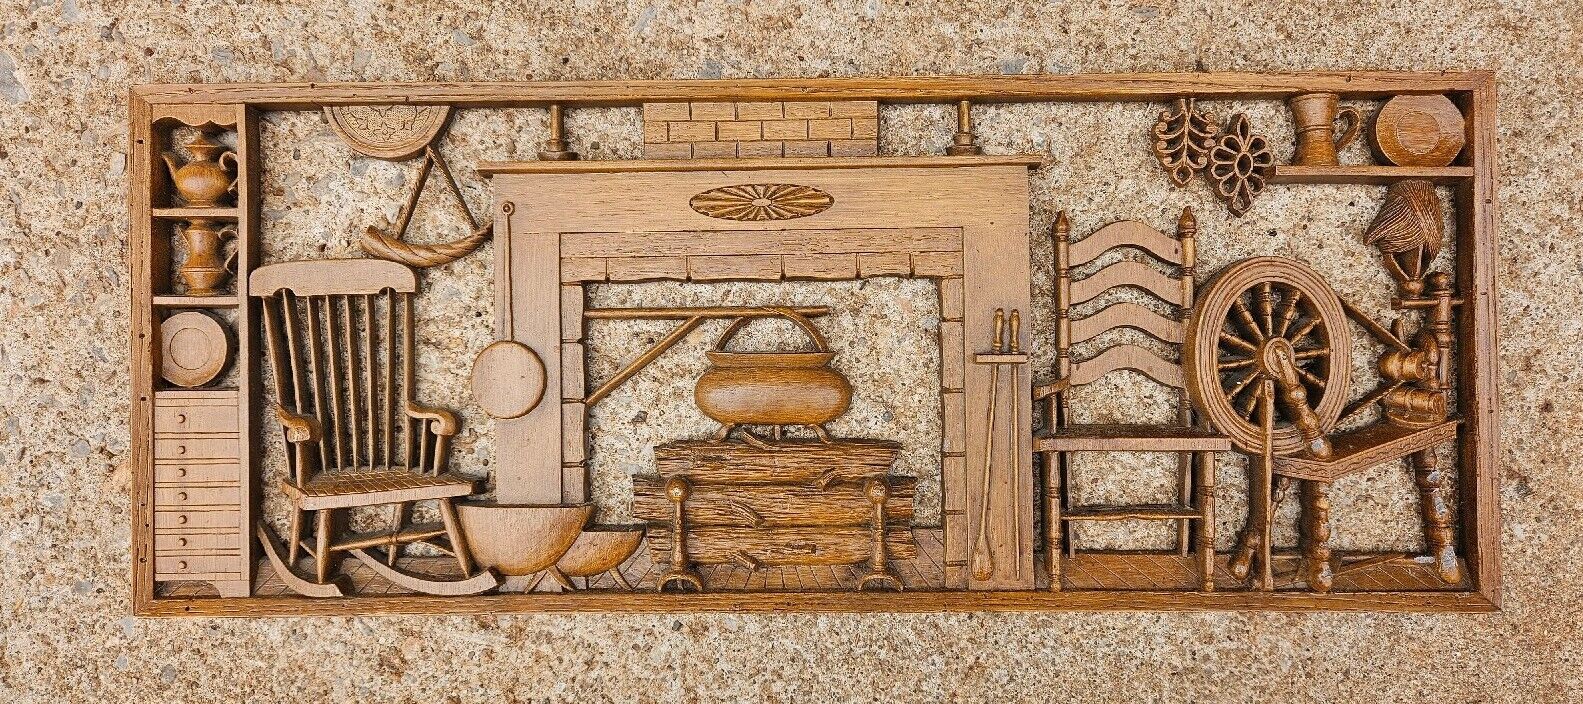 Vintage Burwood Fireplace Cabin cottage Wall Hanging Picture 3D Art Plaque 